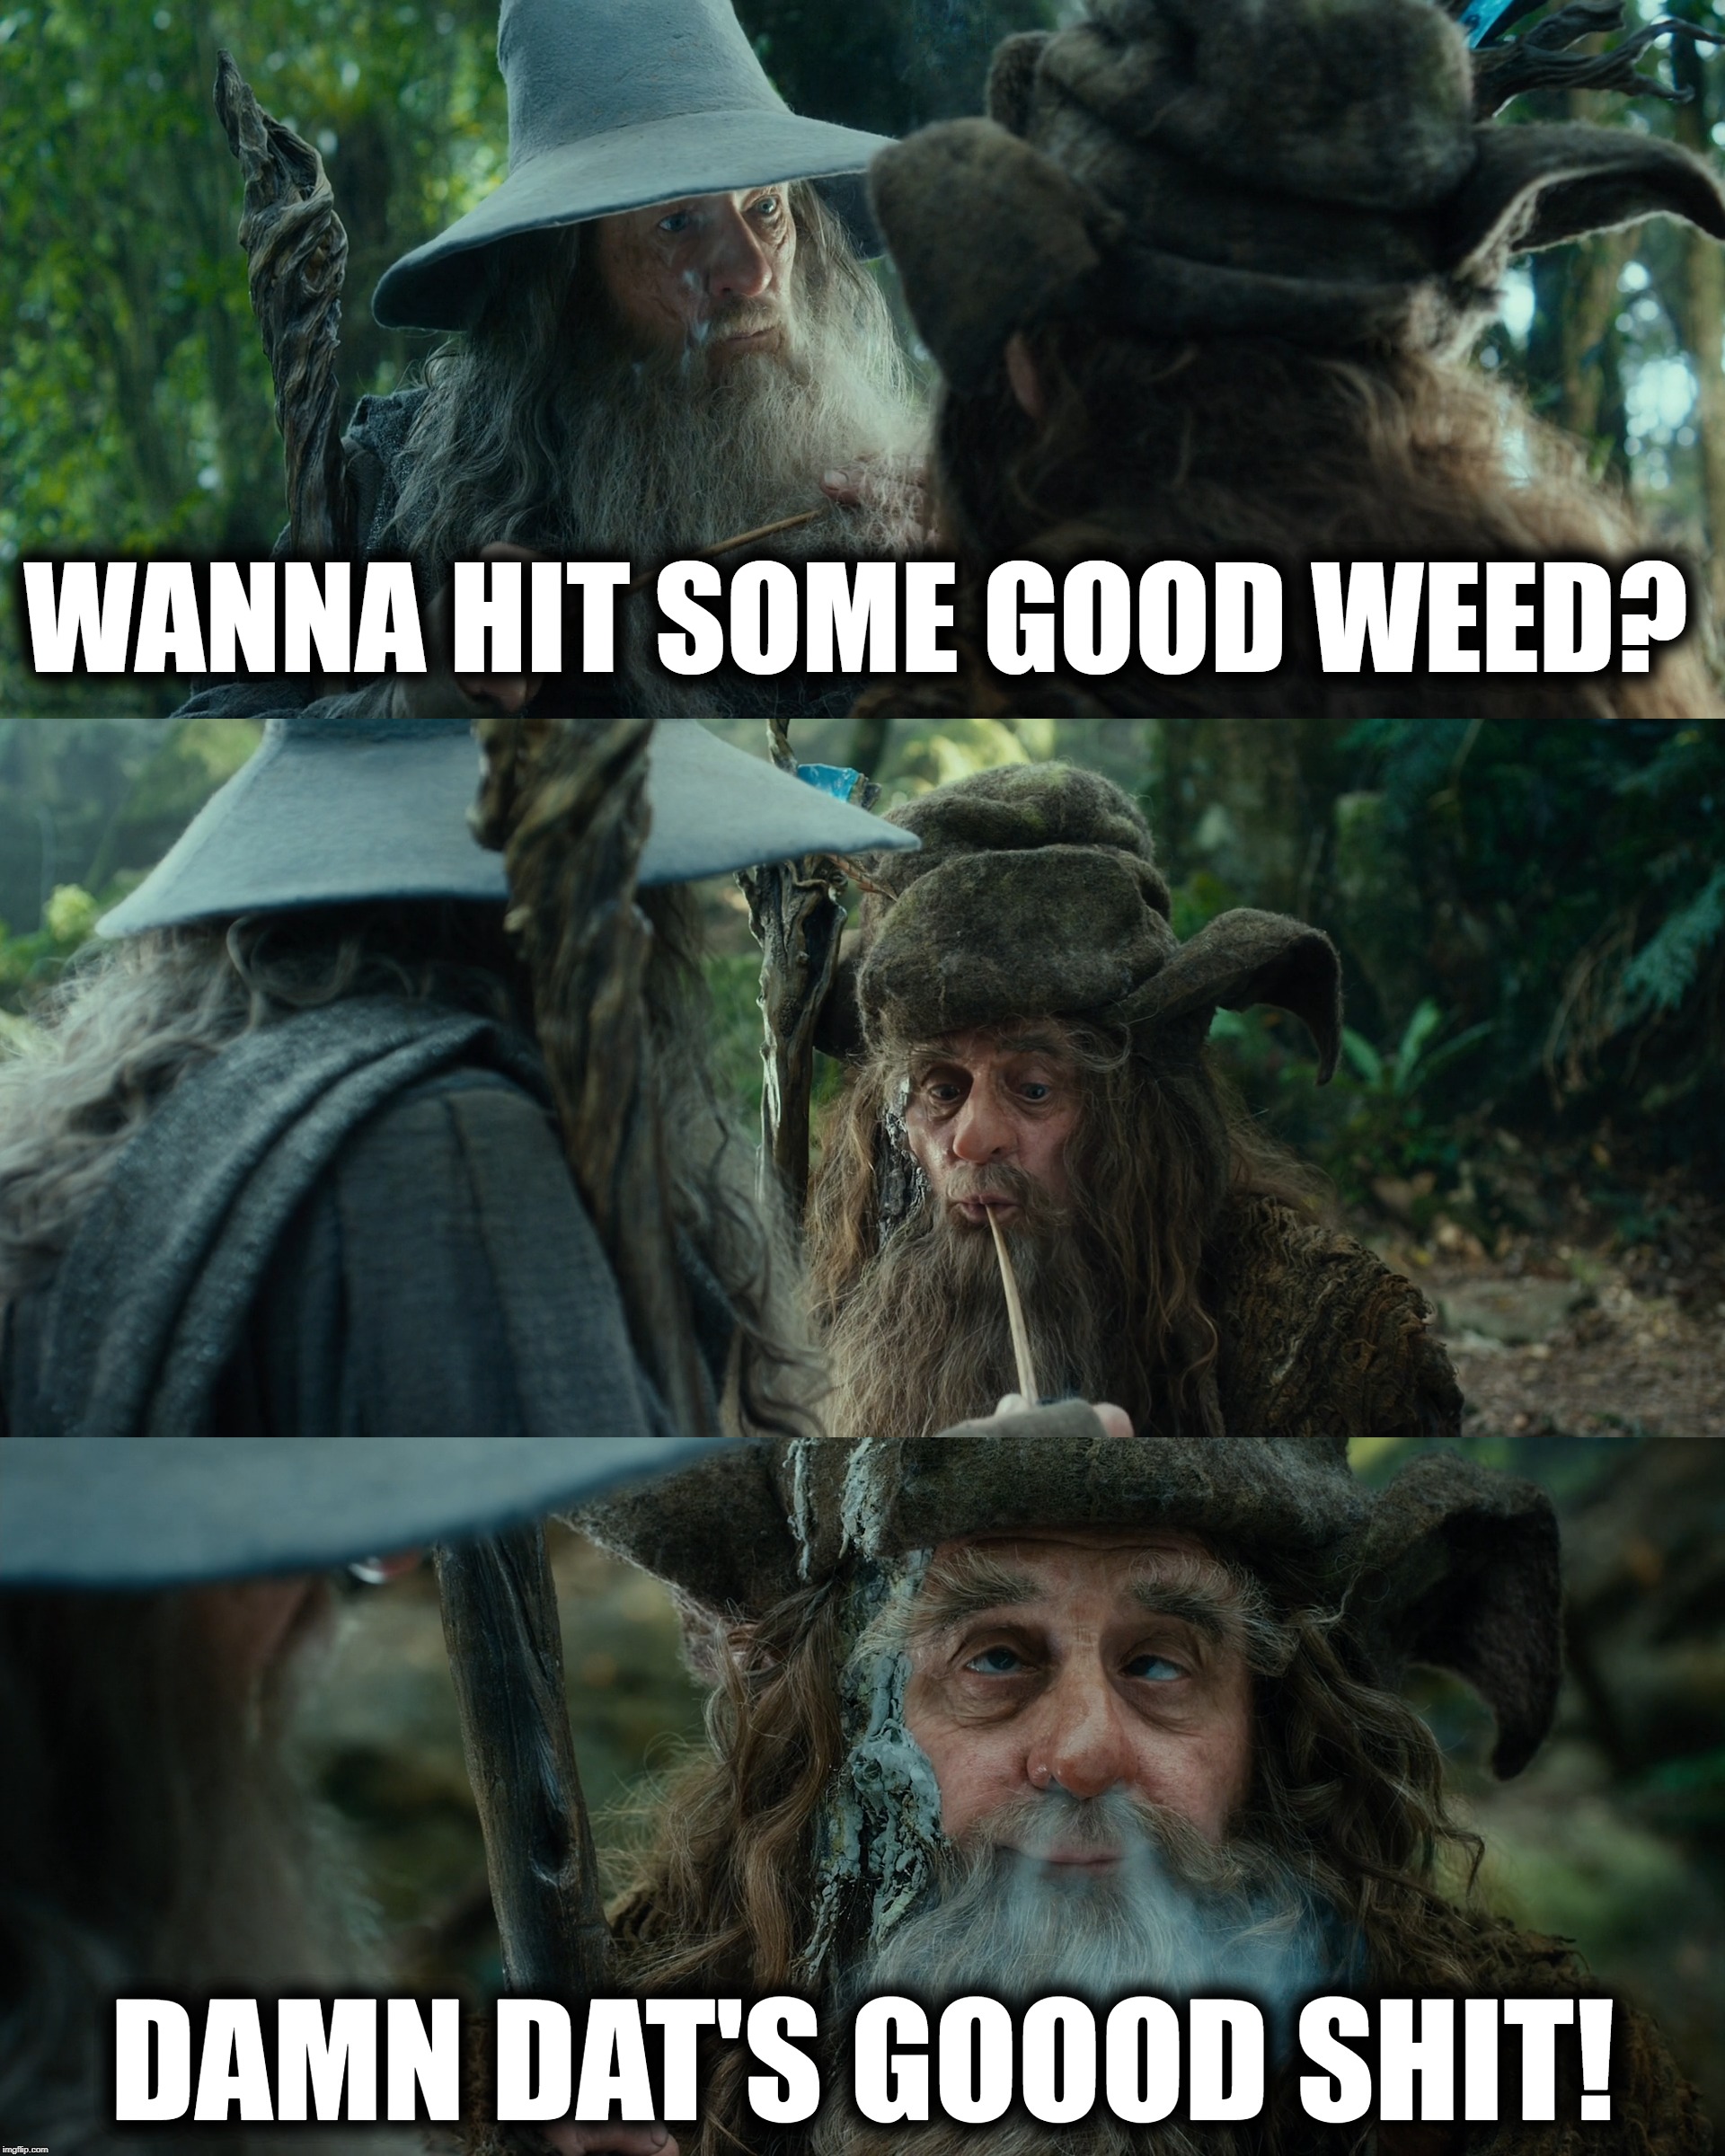 Gandalf and Radagast smoking pipe-weed | WANNA HIT SOME GOOD WEED? DAMN DAT'S GOOOD SHIT! | image tagged in gandalf,radagast,pipeweed,weed,good shit | made w/ Imgflip meme maker